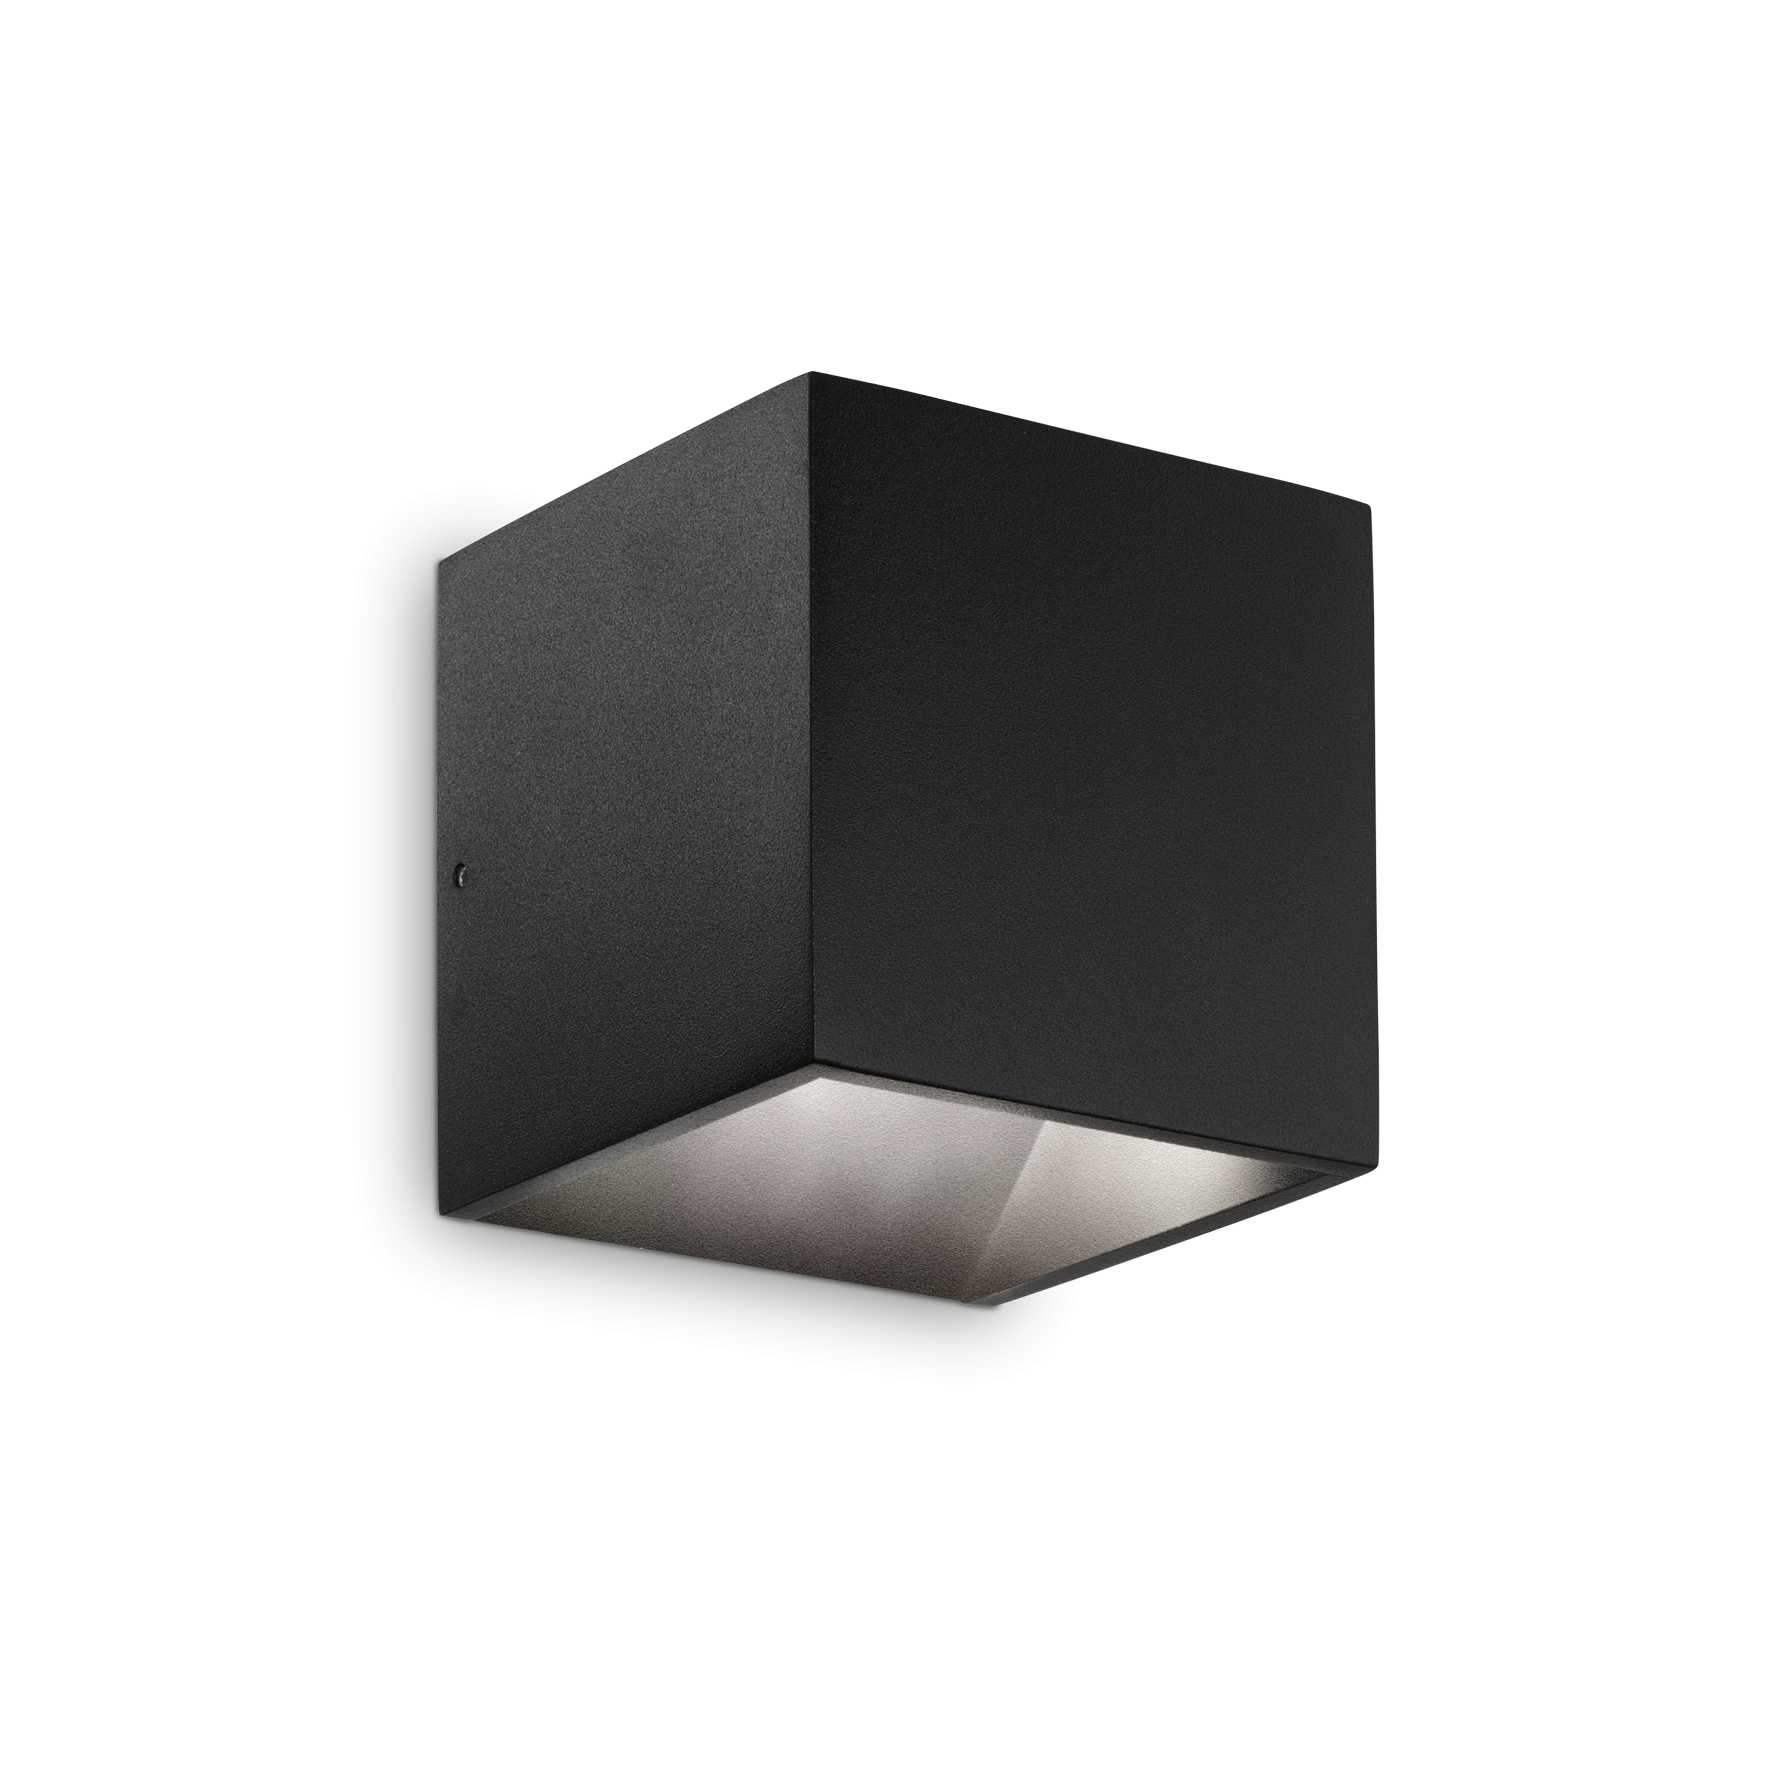 AD hotelska oprema Vanjska zidna lampa Rubik ap 4000k- Crna boja slika proizvoda